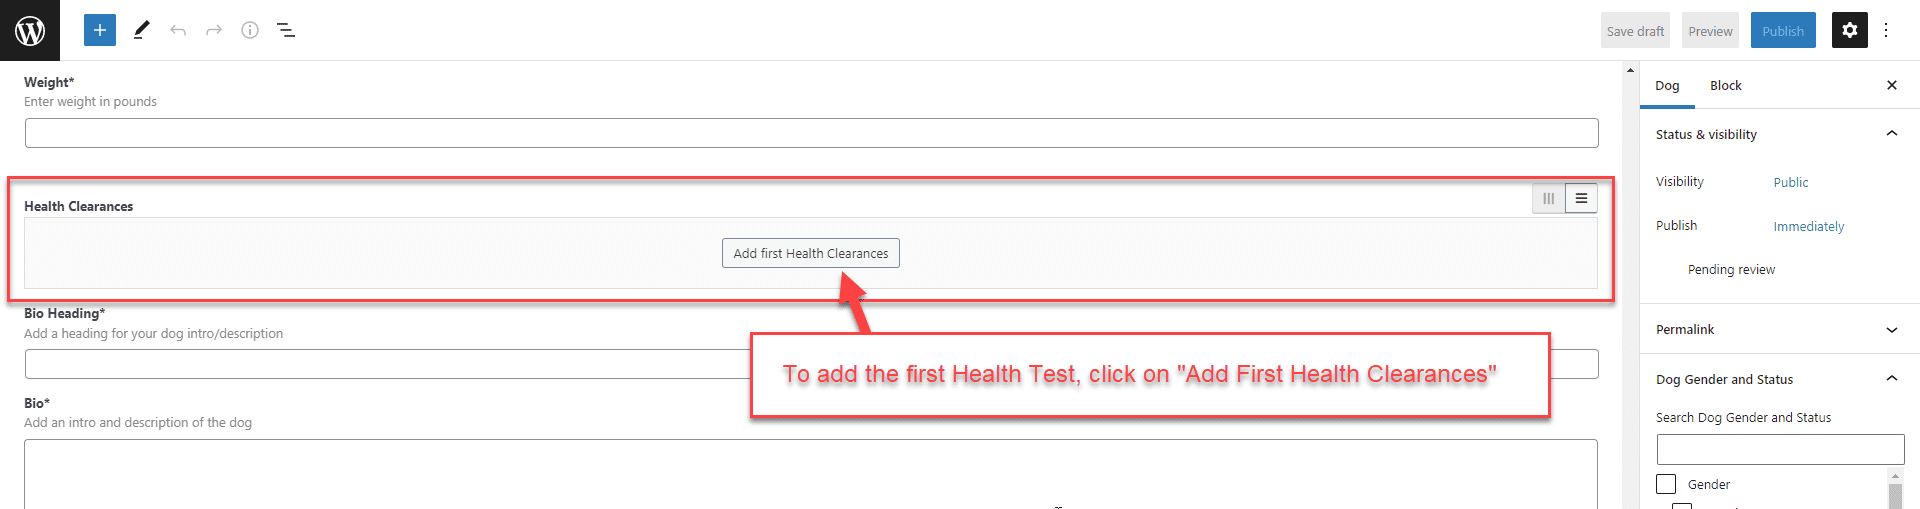 Dogs - Add First Health Clearance - Screenshot